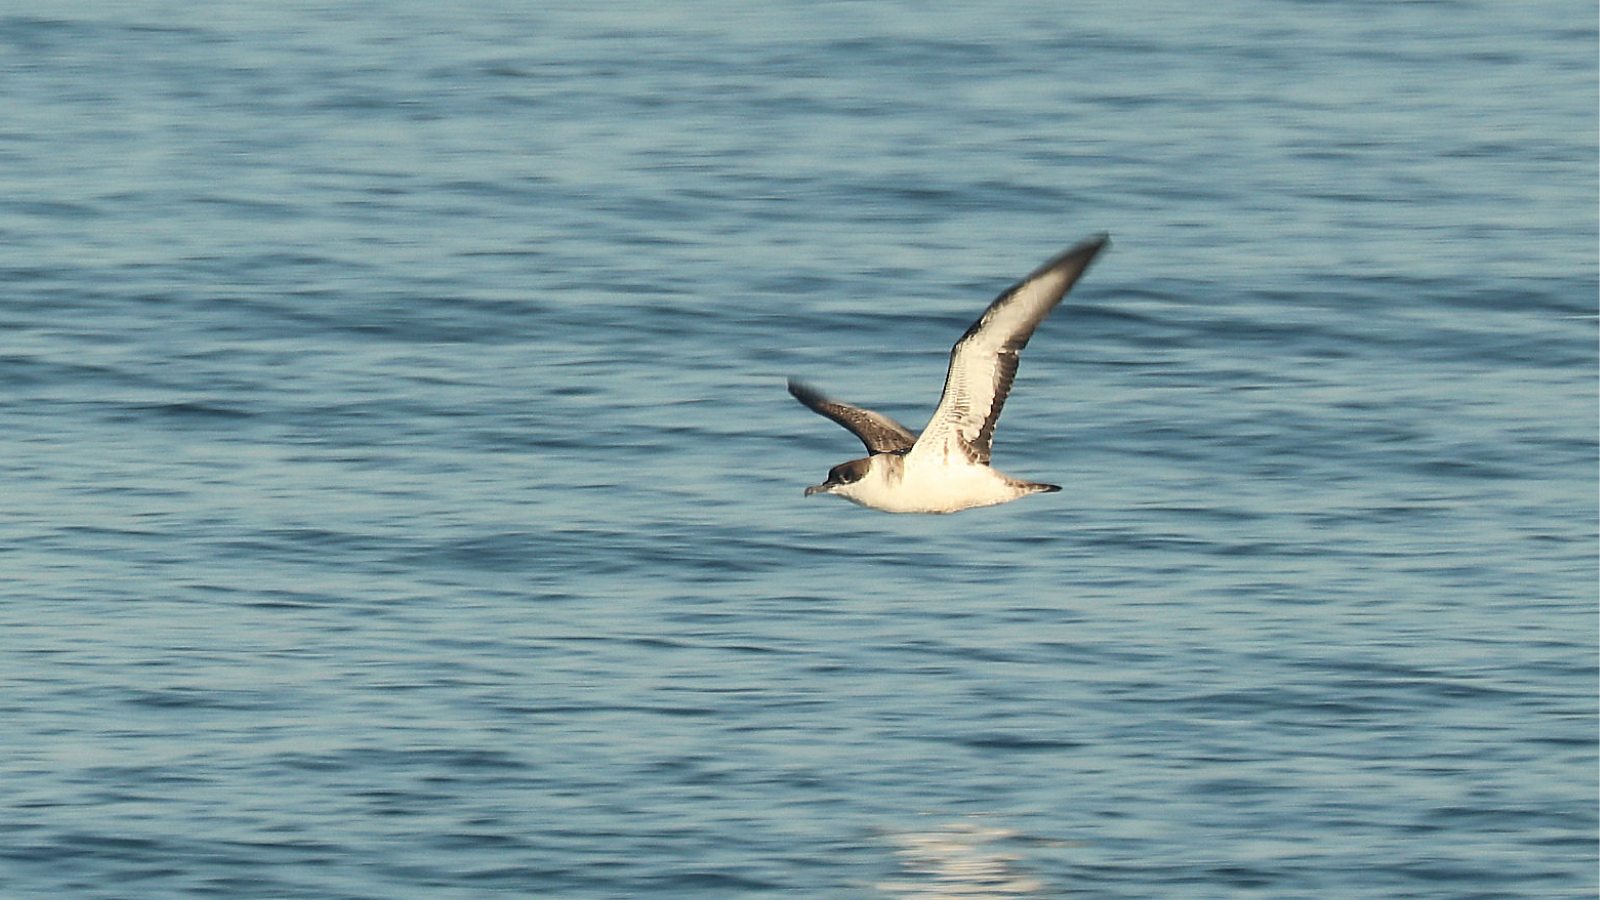 Shearwater seabird flying over the open ocean